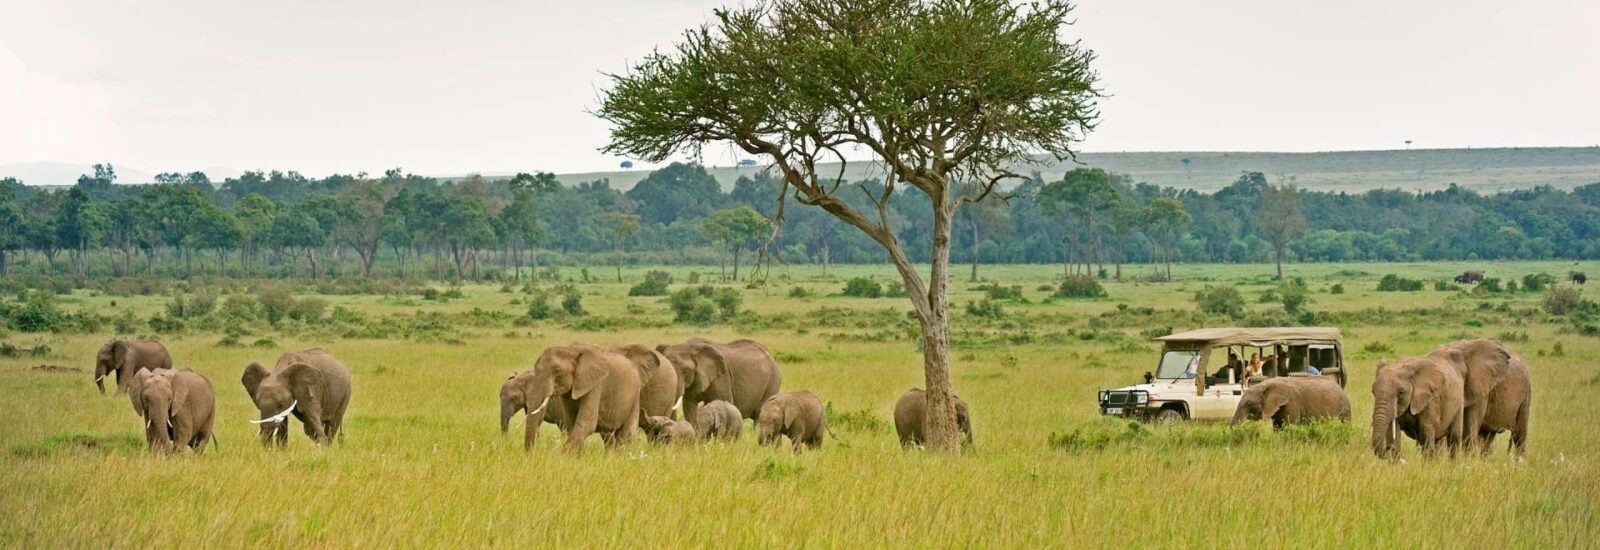 5 Days Kenya Wildlife Escape